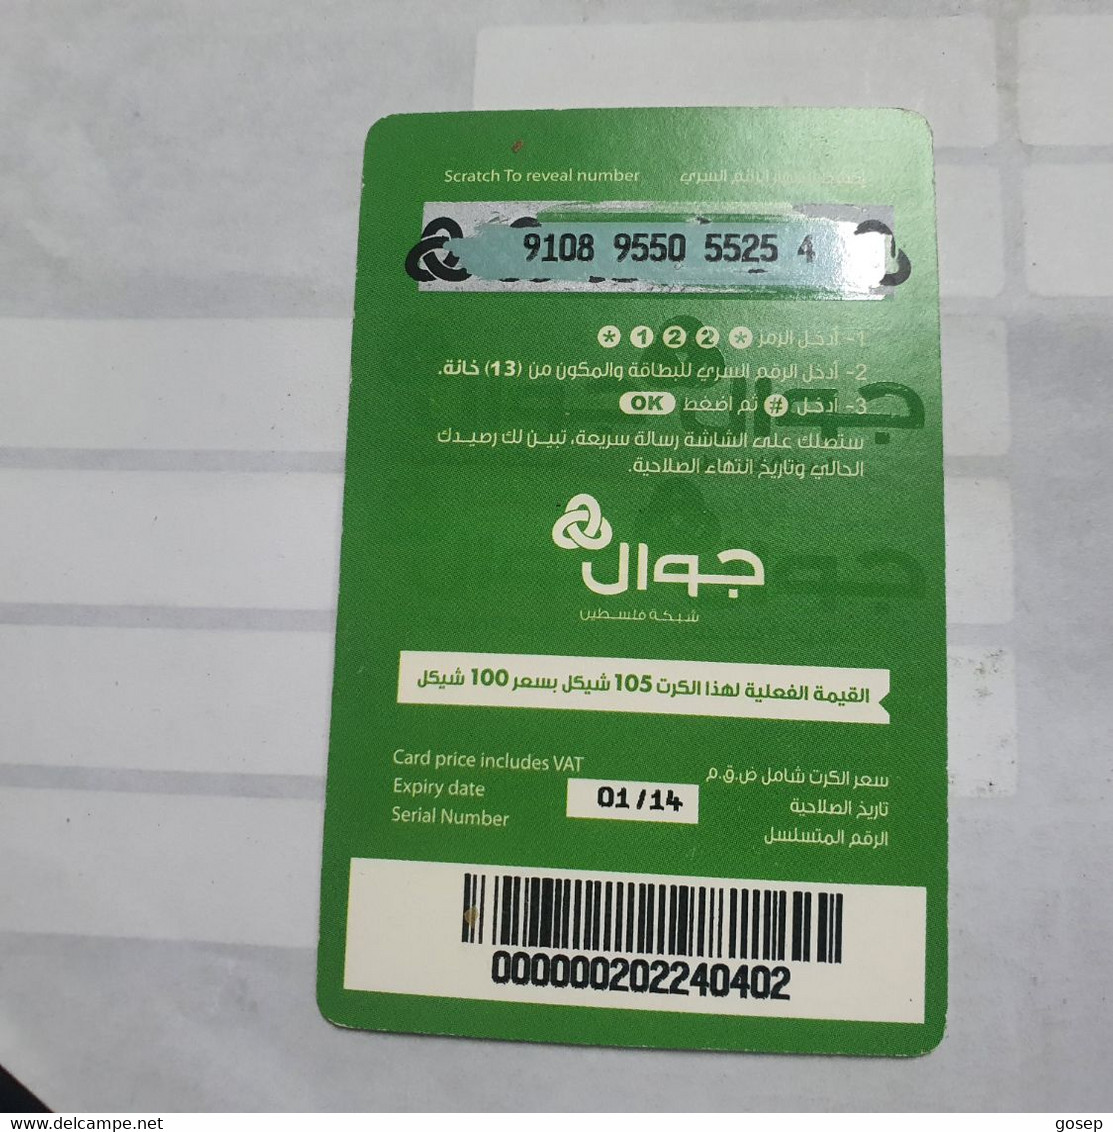 PALESTINE-(PA-G-0056)-Jawwal Green-(251)-(105₪)-(9108-9550-5525-4)-(1/1/2014)-used Card-1 Prepiad Free - Palestine